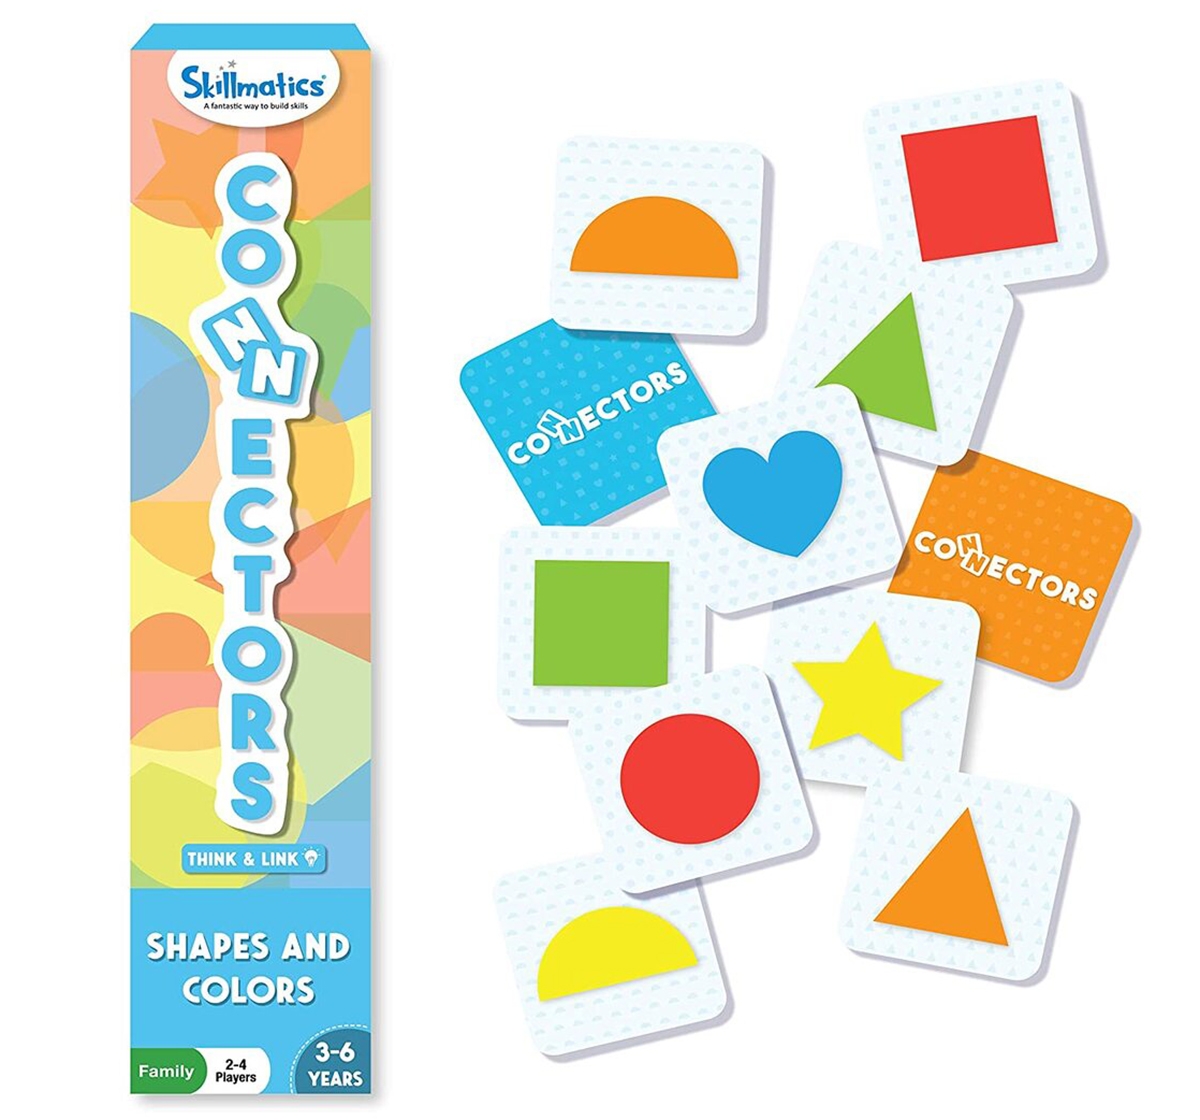 Skillmatics | Skillmatics Connectors Educational Game: Shape and Color